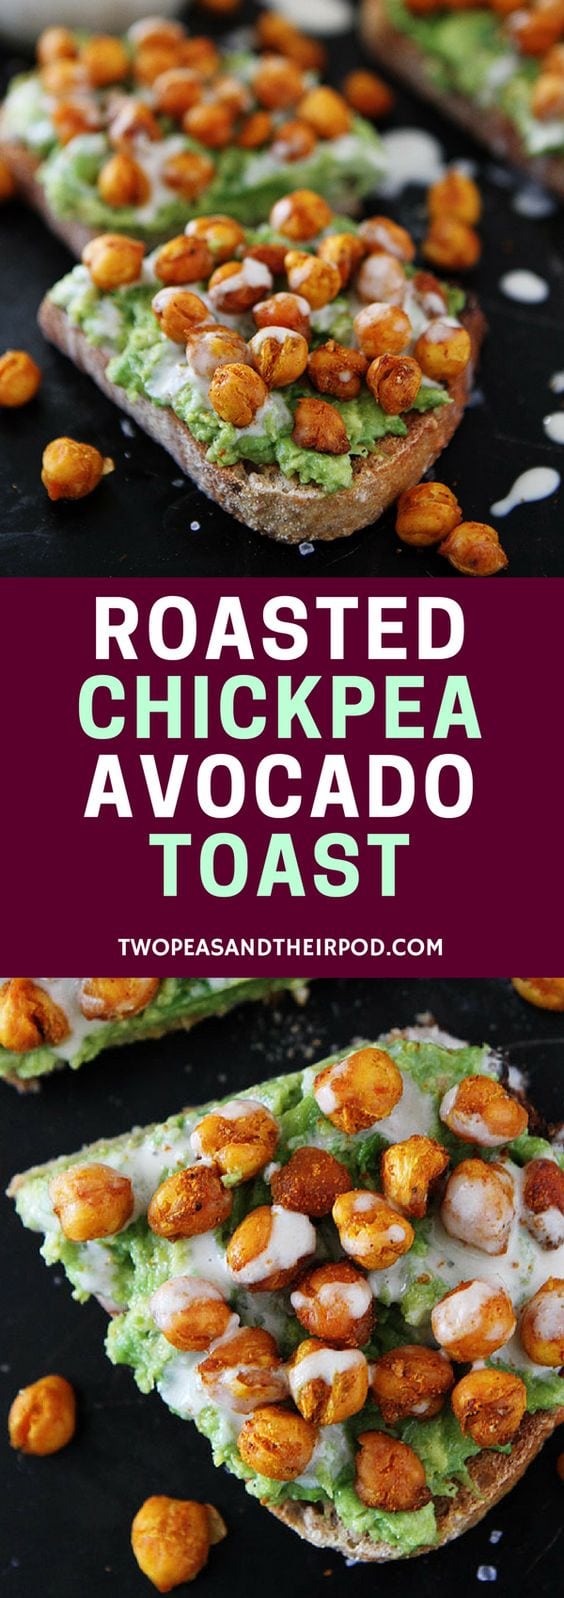 Roasted Chickpea Avocado Toast with lemon tahini dressing is a great healthy breakfast, lunch, or snack! #vegan #glutenfree #vegetarian #healthyrecipe #easyrecipes #avocadotoast #chickpeas #avocado 